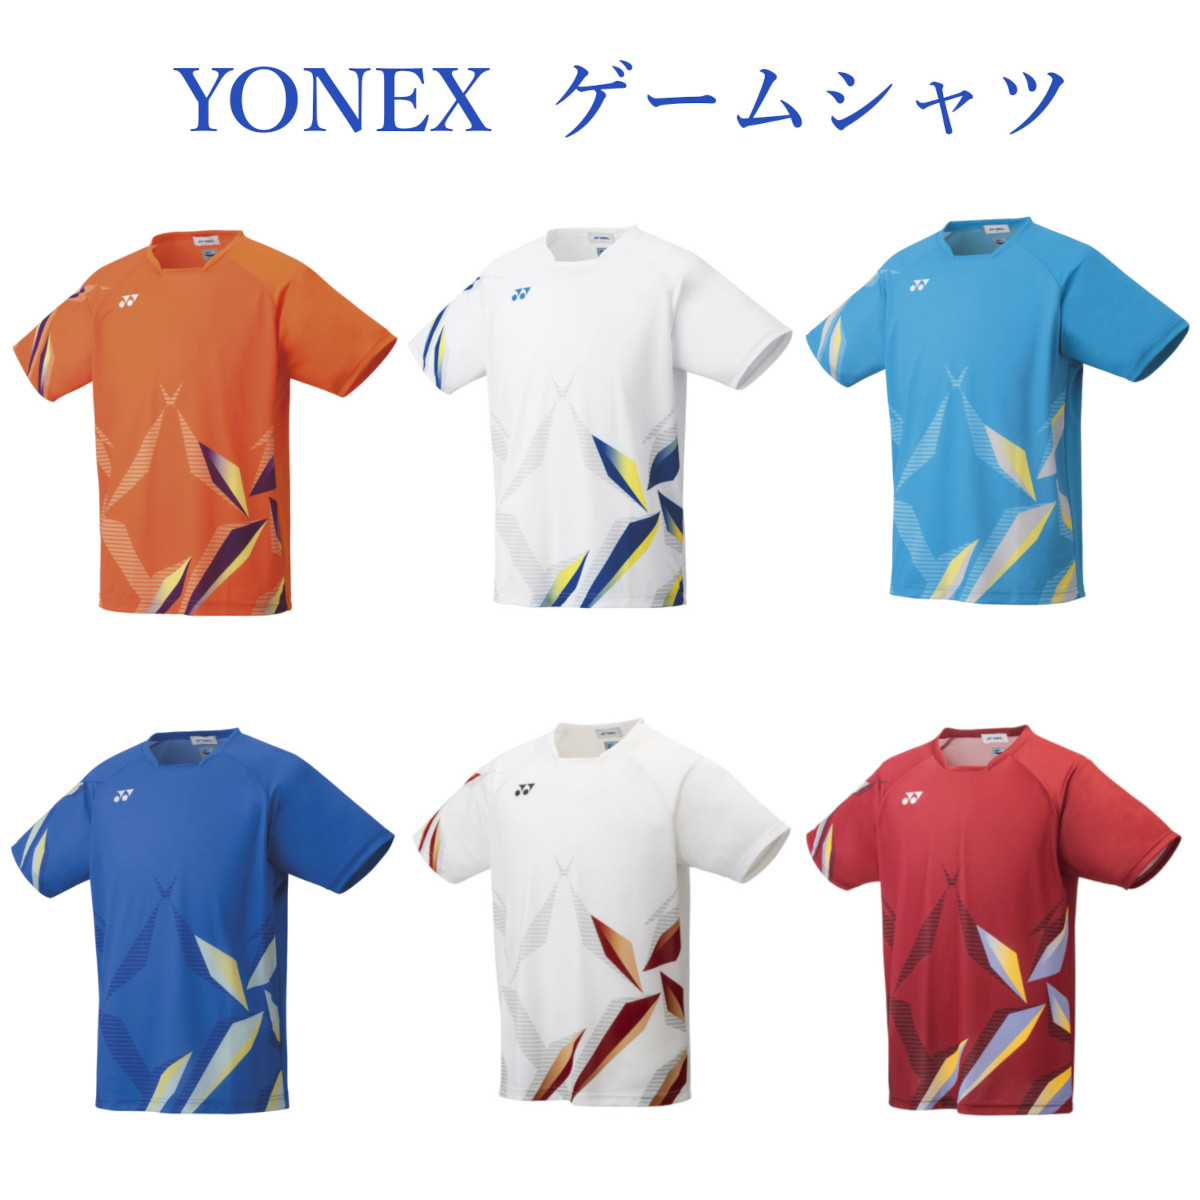 YONEX 男性用 ユニフォーム ヨネックス ゲームシャツ(フィットスタイル) 10407 メンズ 2021SS バドミントン テニス ソフトテニス ゆうパケット(メール便)対応